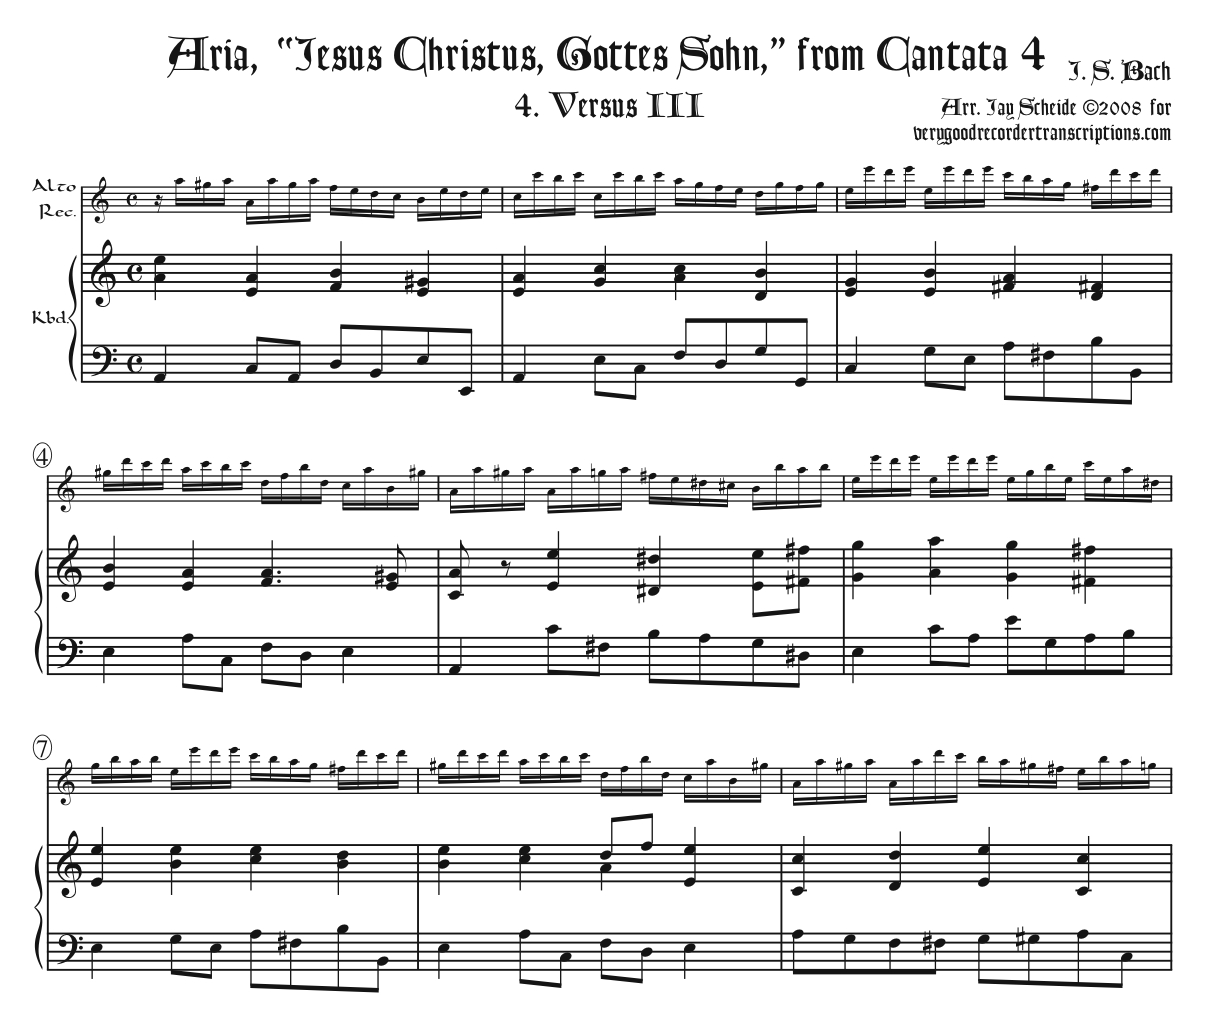 Verse 3, “Jesus Christus, Gottes Sohn”, from Cantata 4